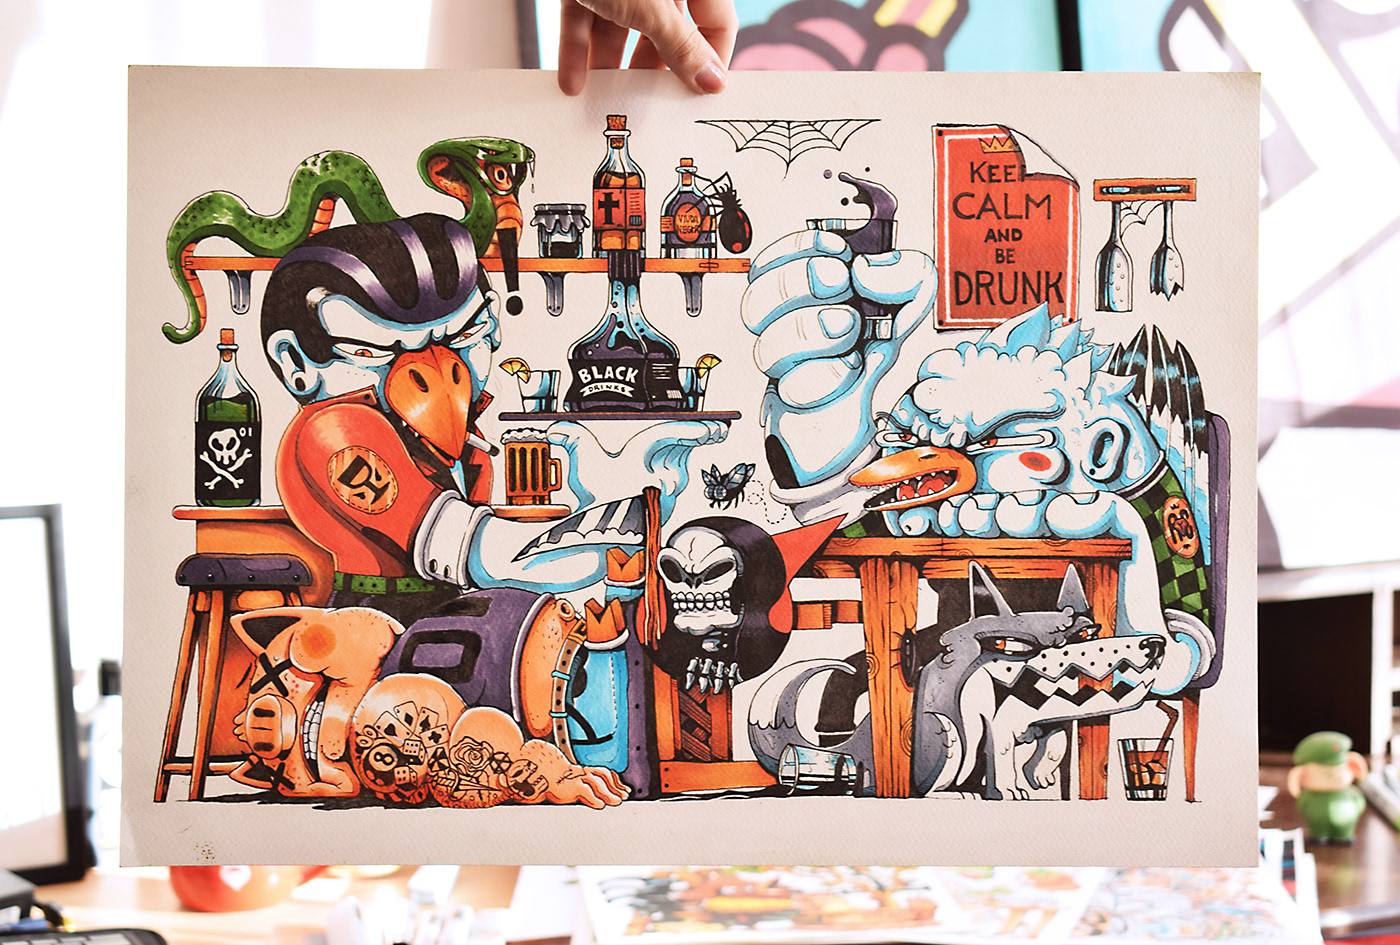 handmadeart art characterdesign editorial artwork designillustration publicity bar monsters Style